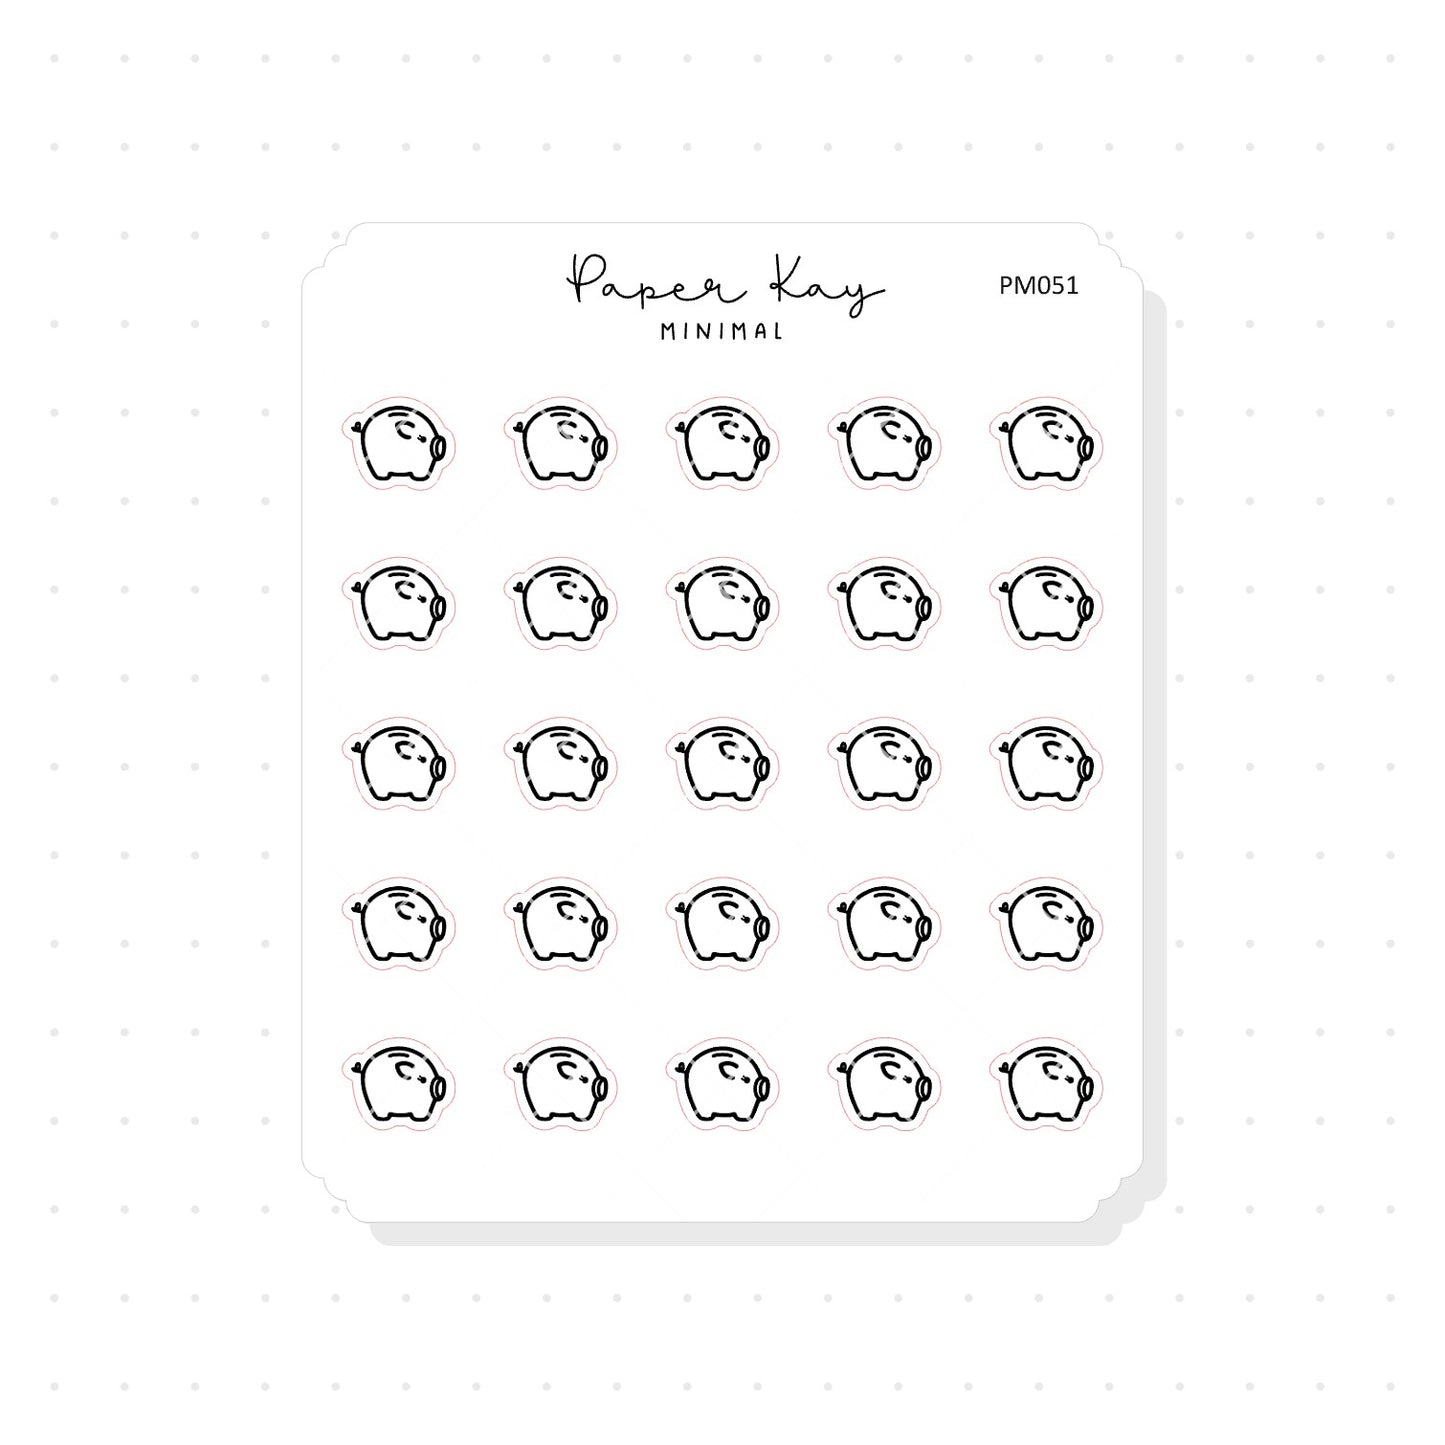 (PM051) Piggy Bank / Saving Money - Tiny Minimal Icon Stickers